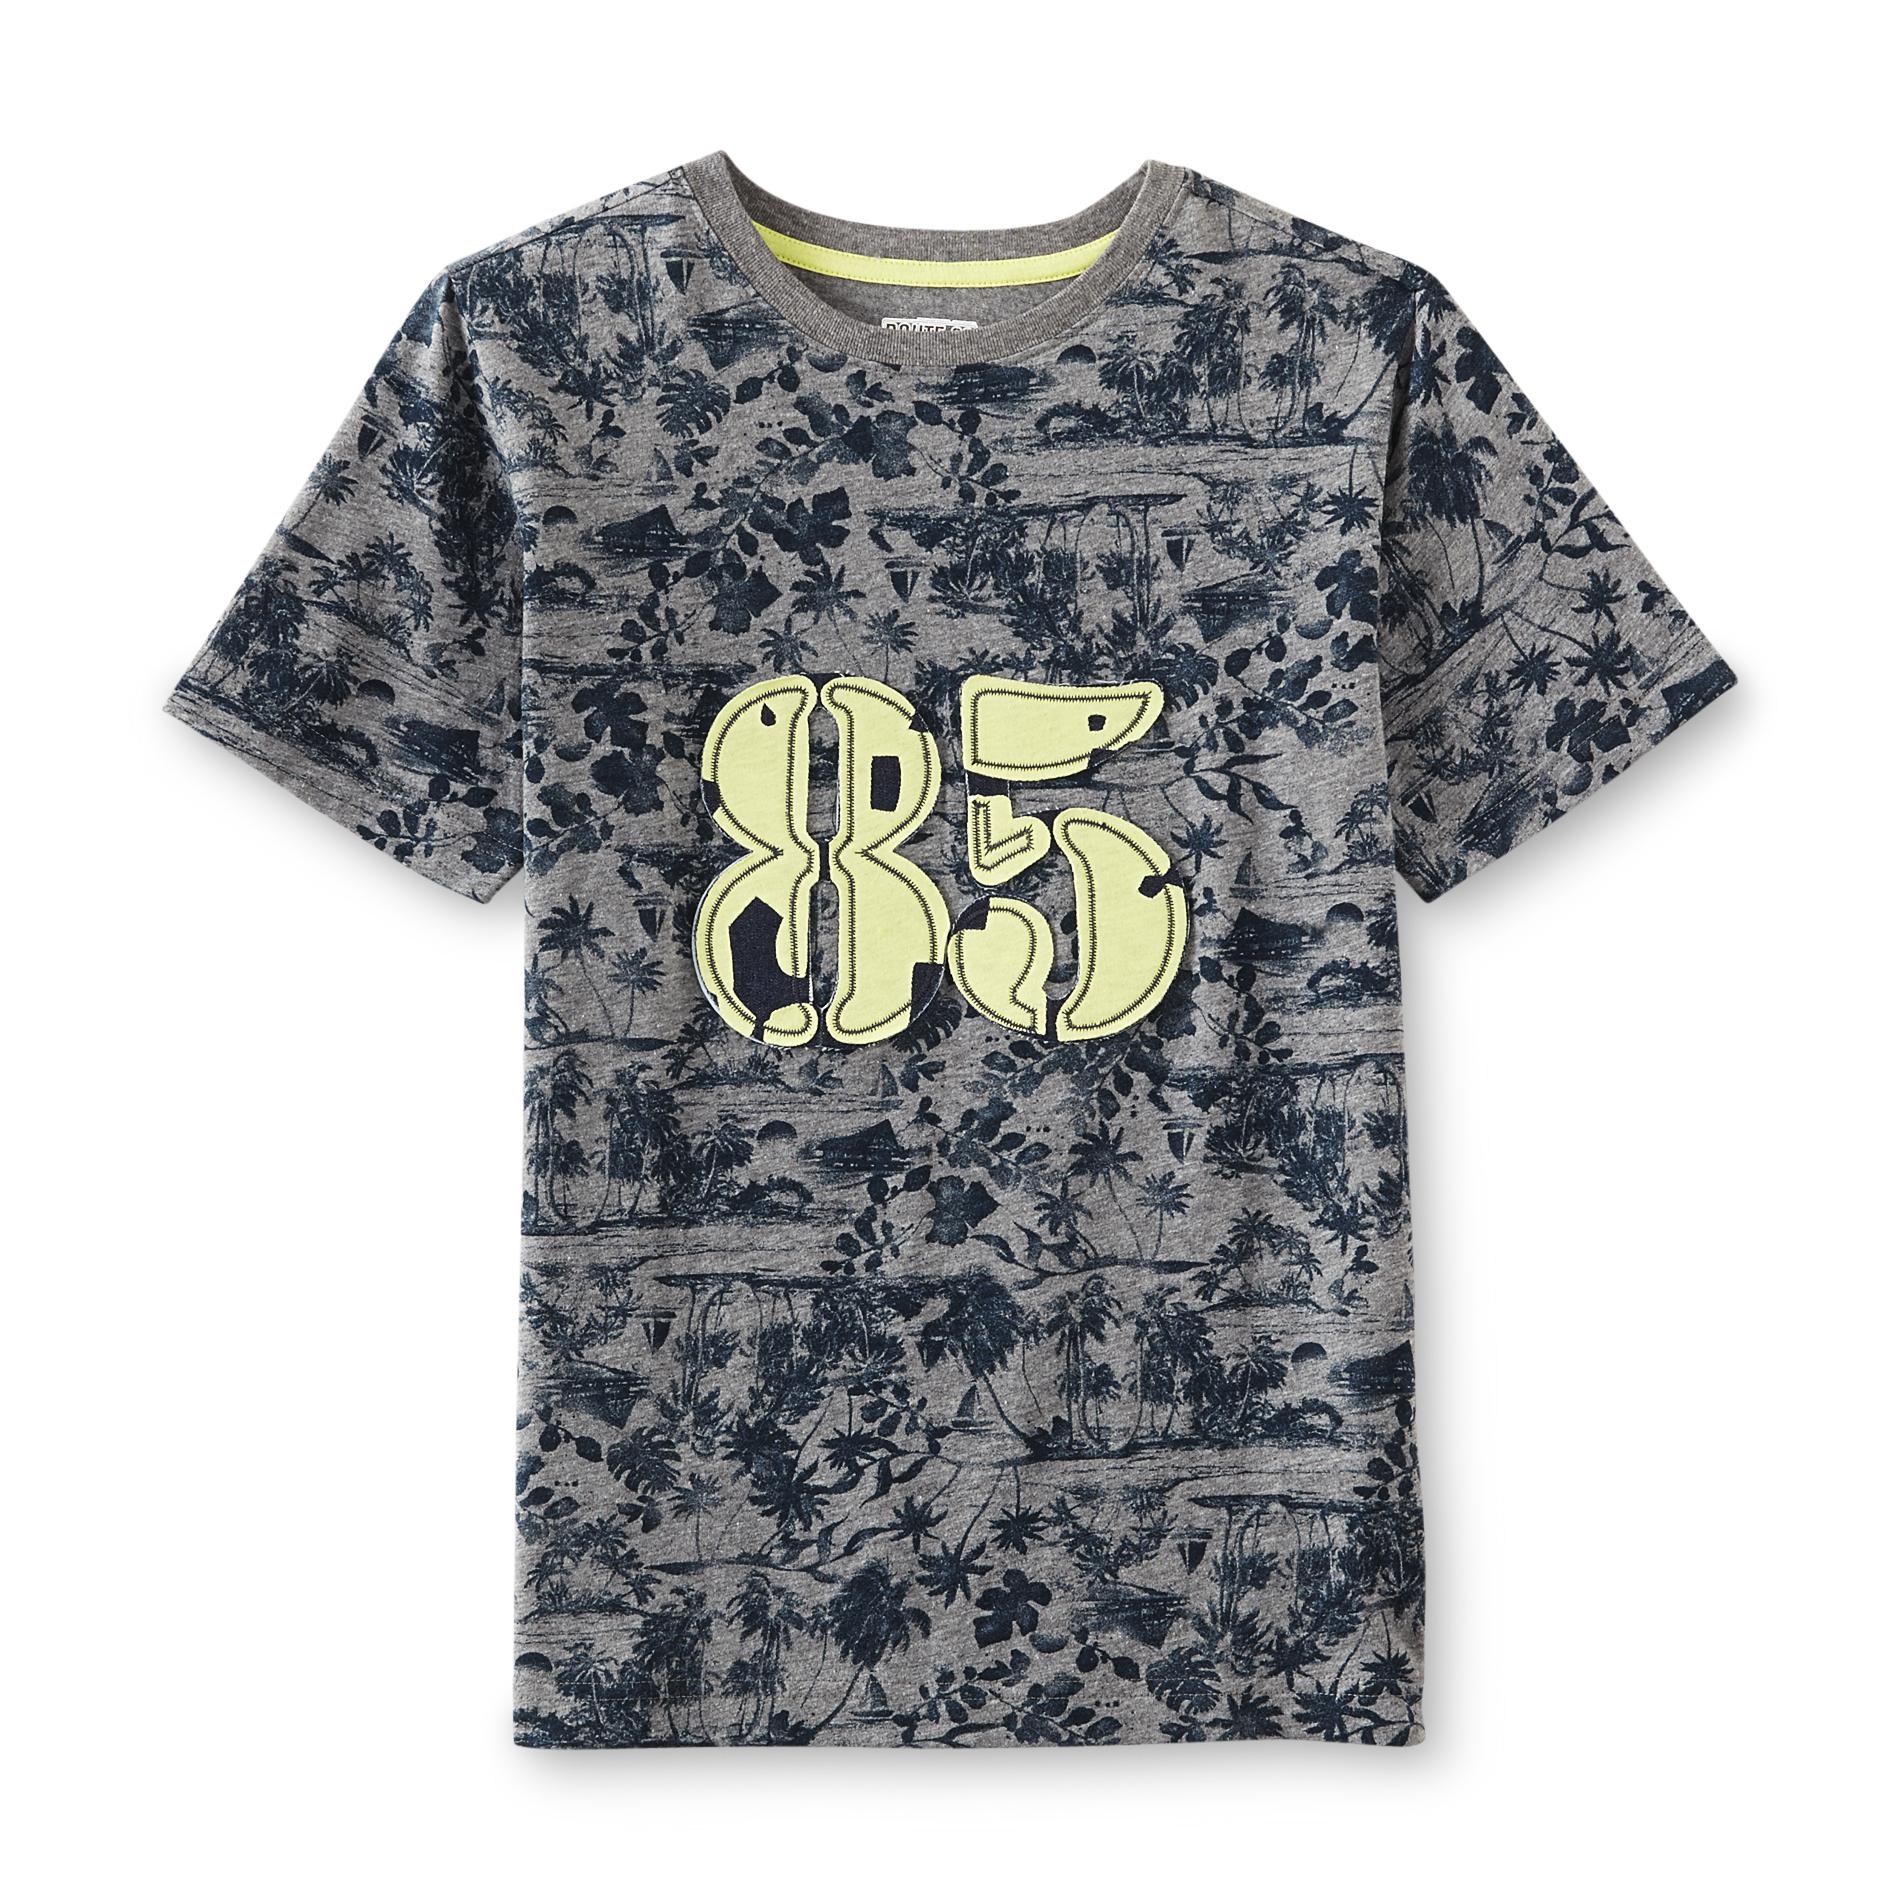 Route 66 Boy's Graphic T-Shirt - Tropical